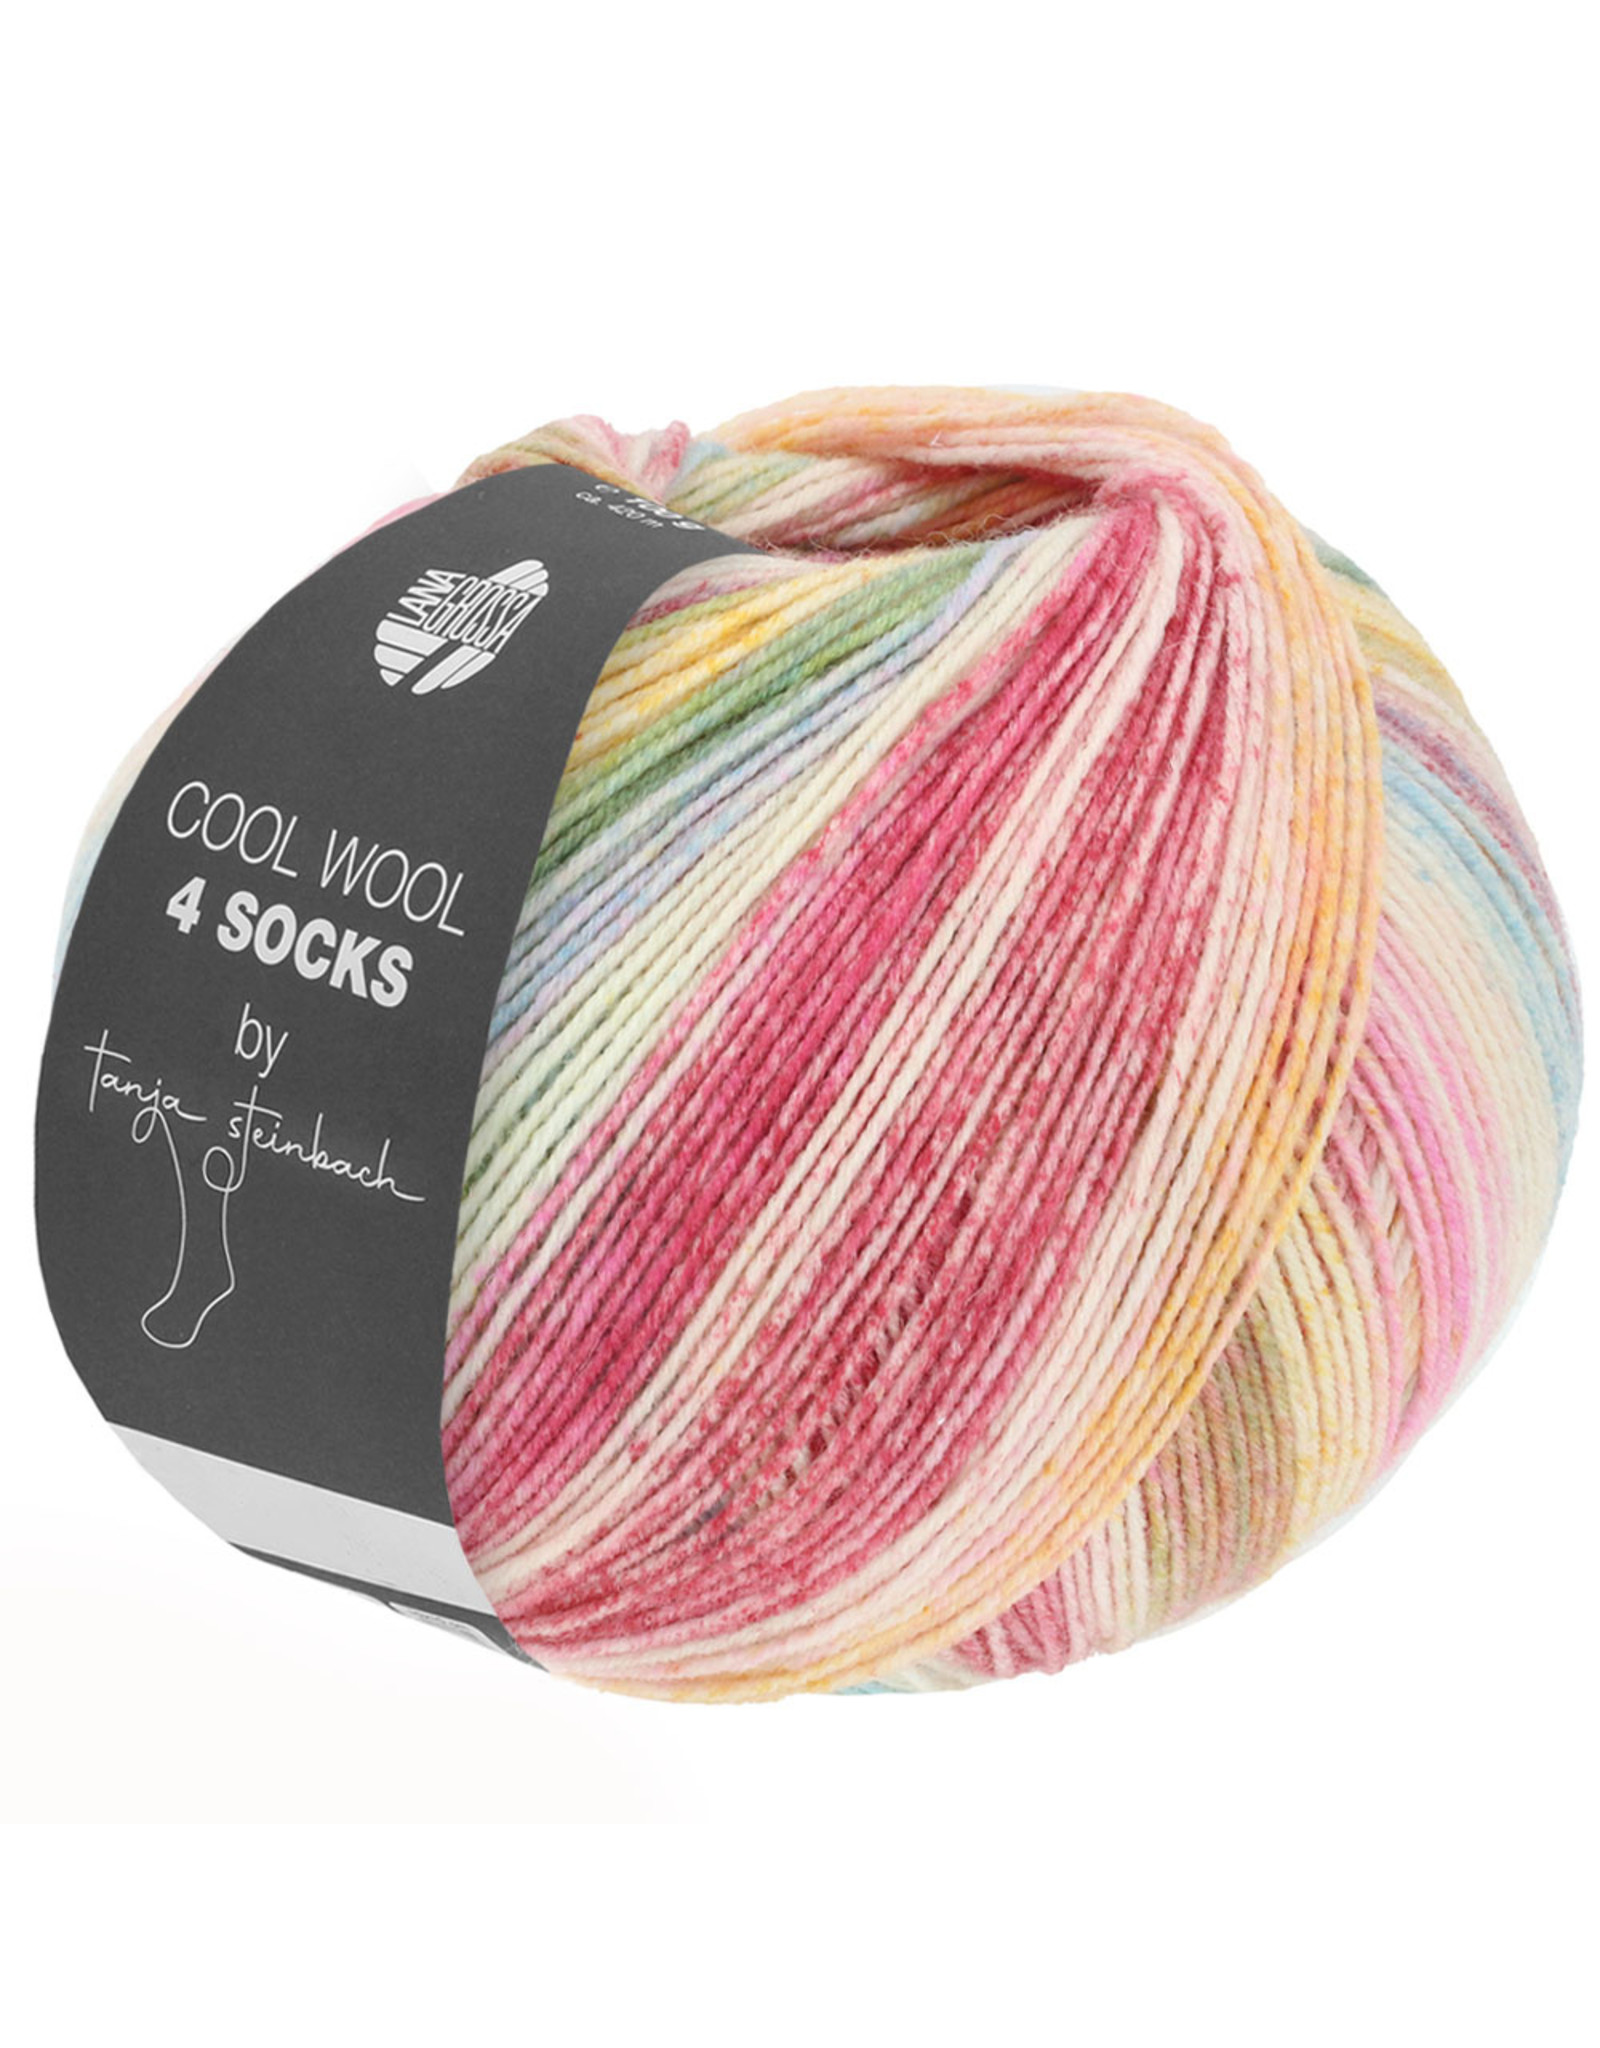 Lana Grossa Lana Grossa Cool wool 4 socks by Tanja Steinbach 7757